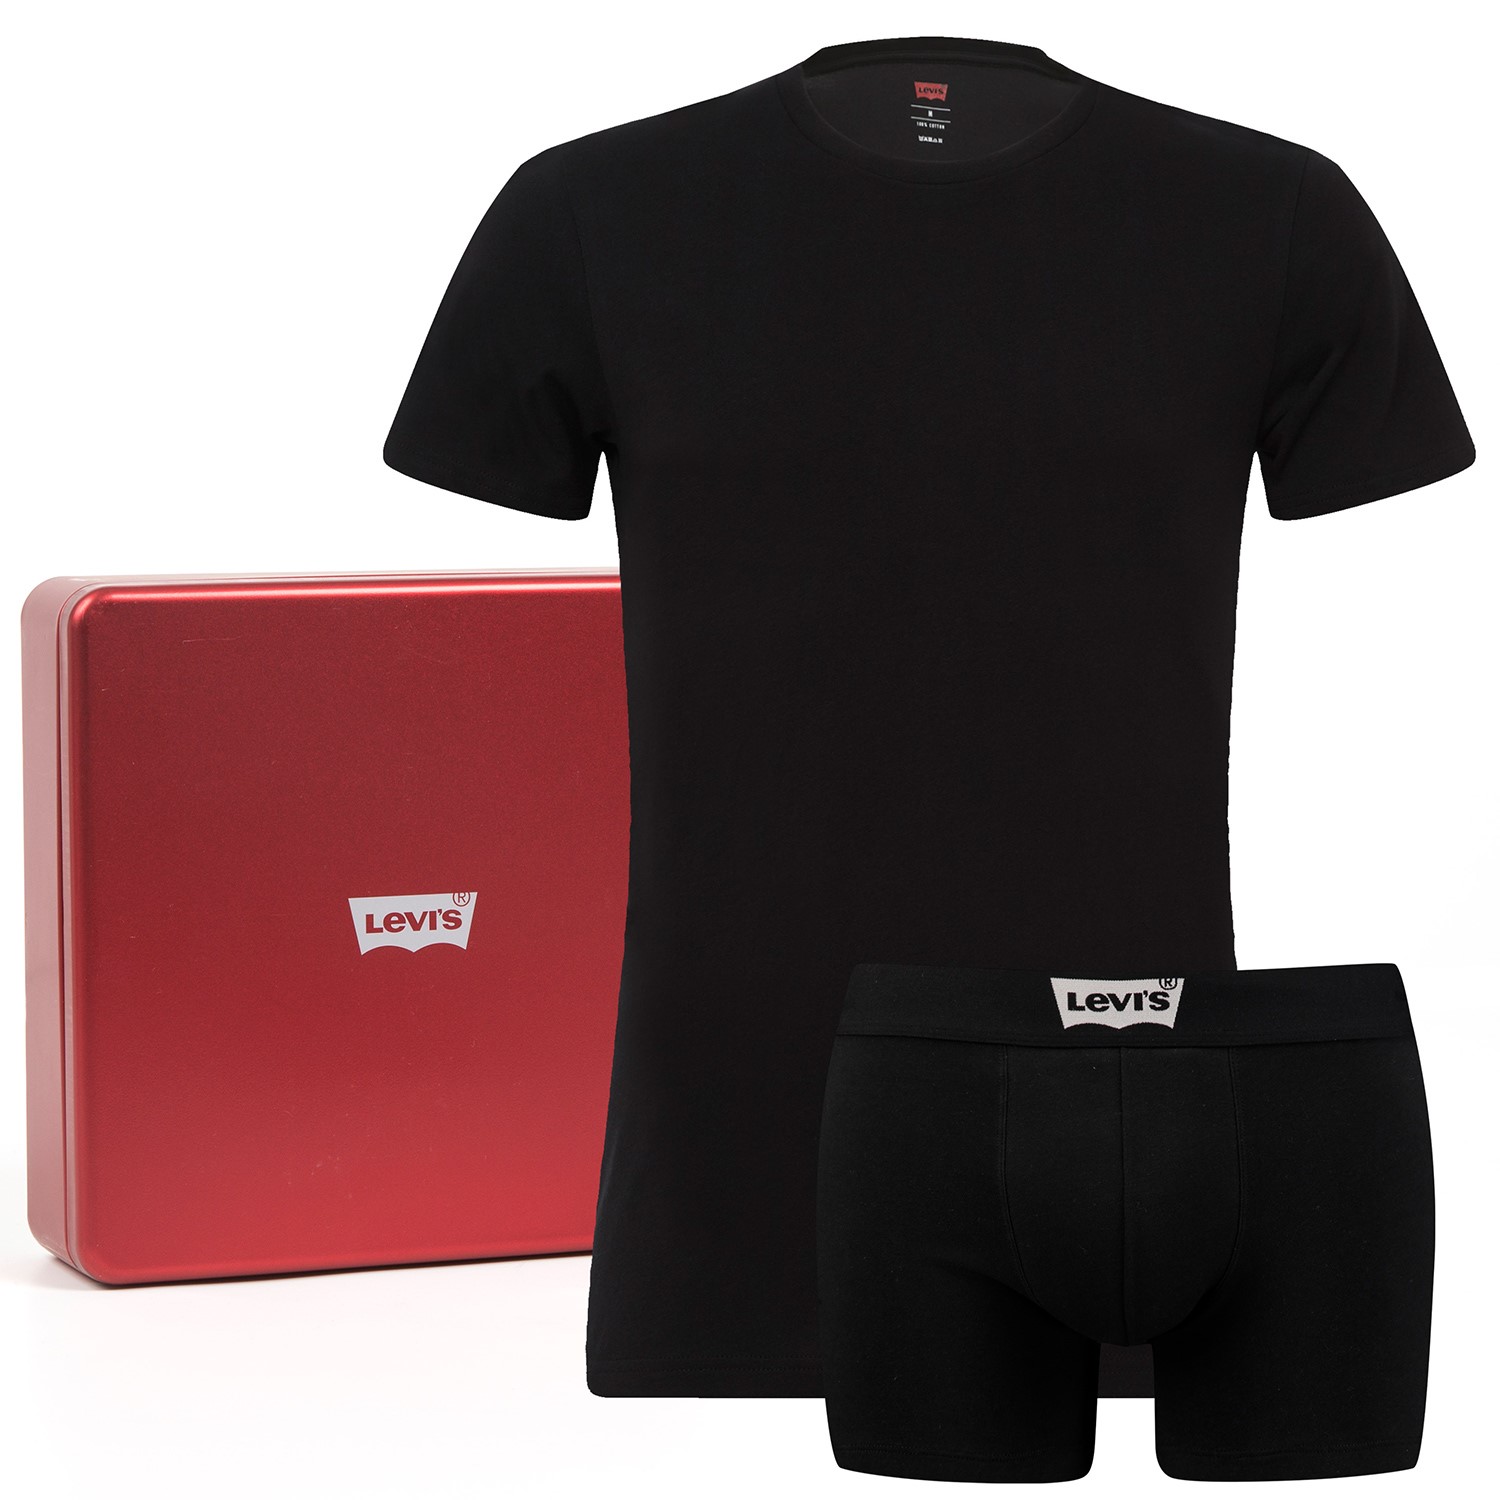 Levis Bodywear Starterpack Giftbox